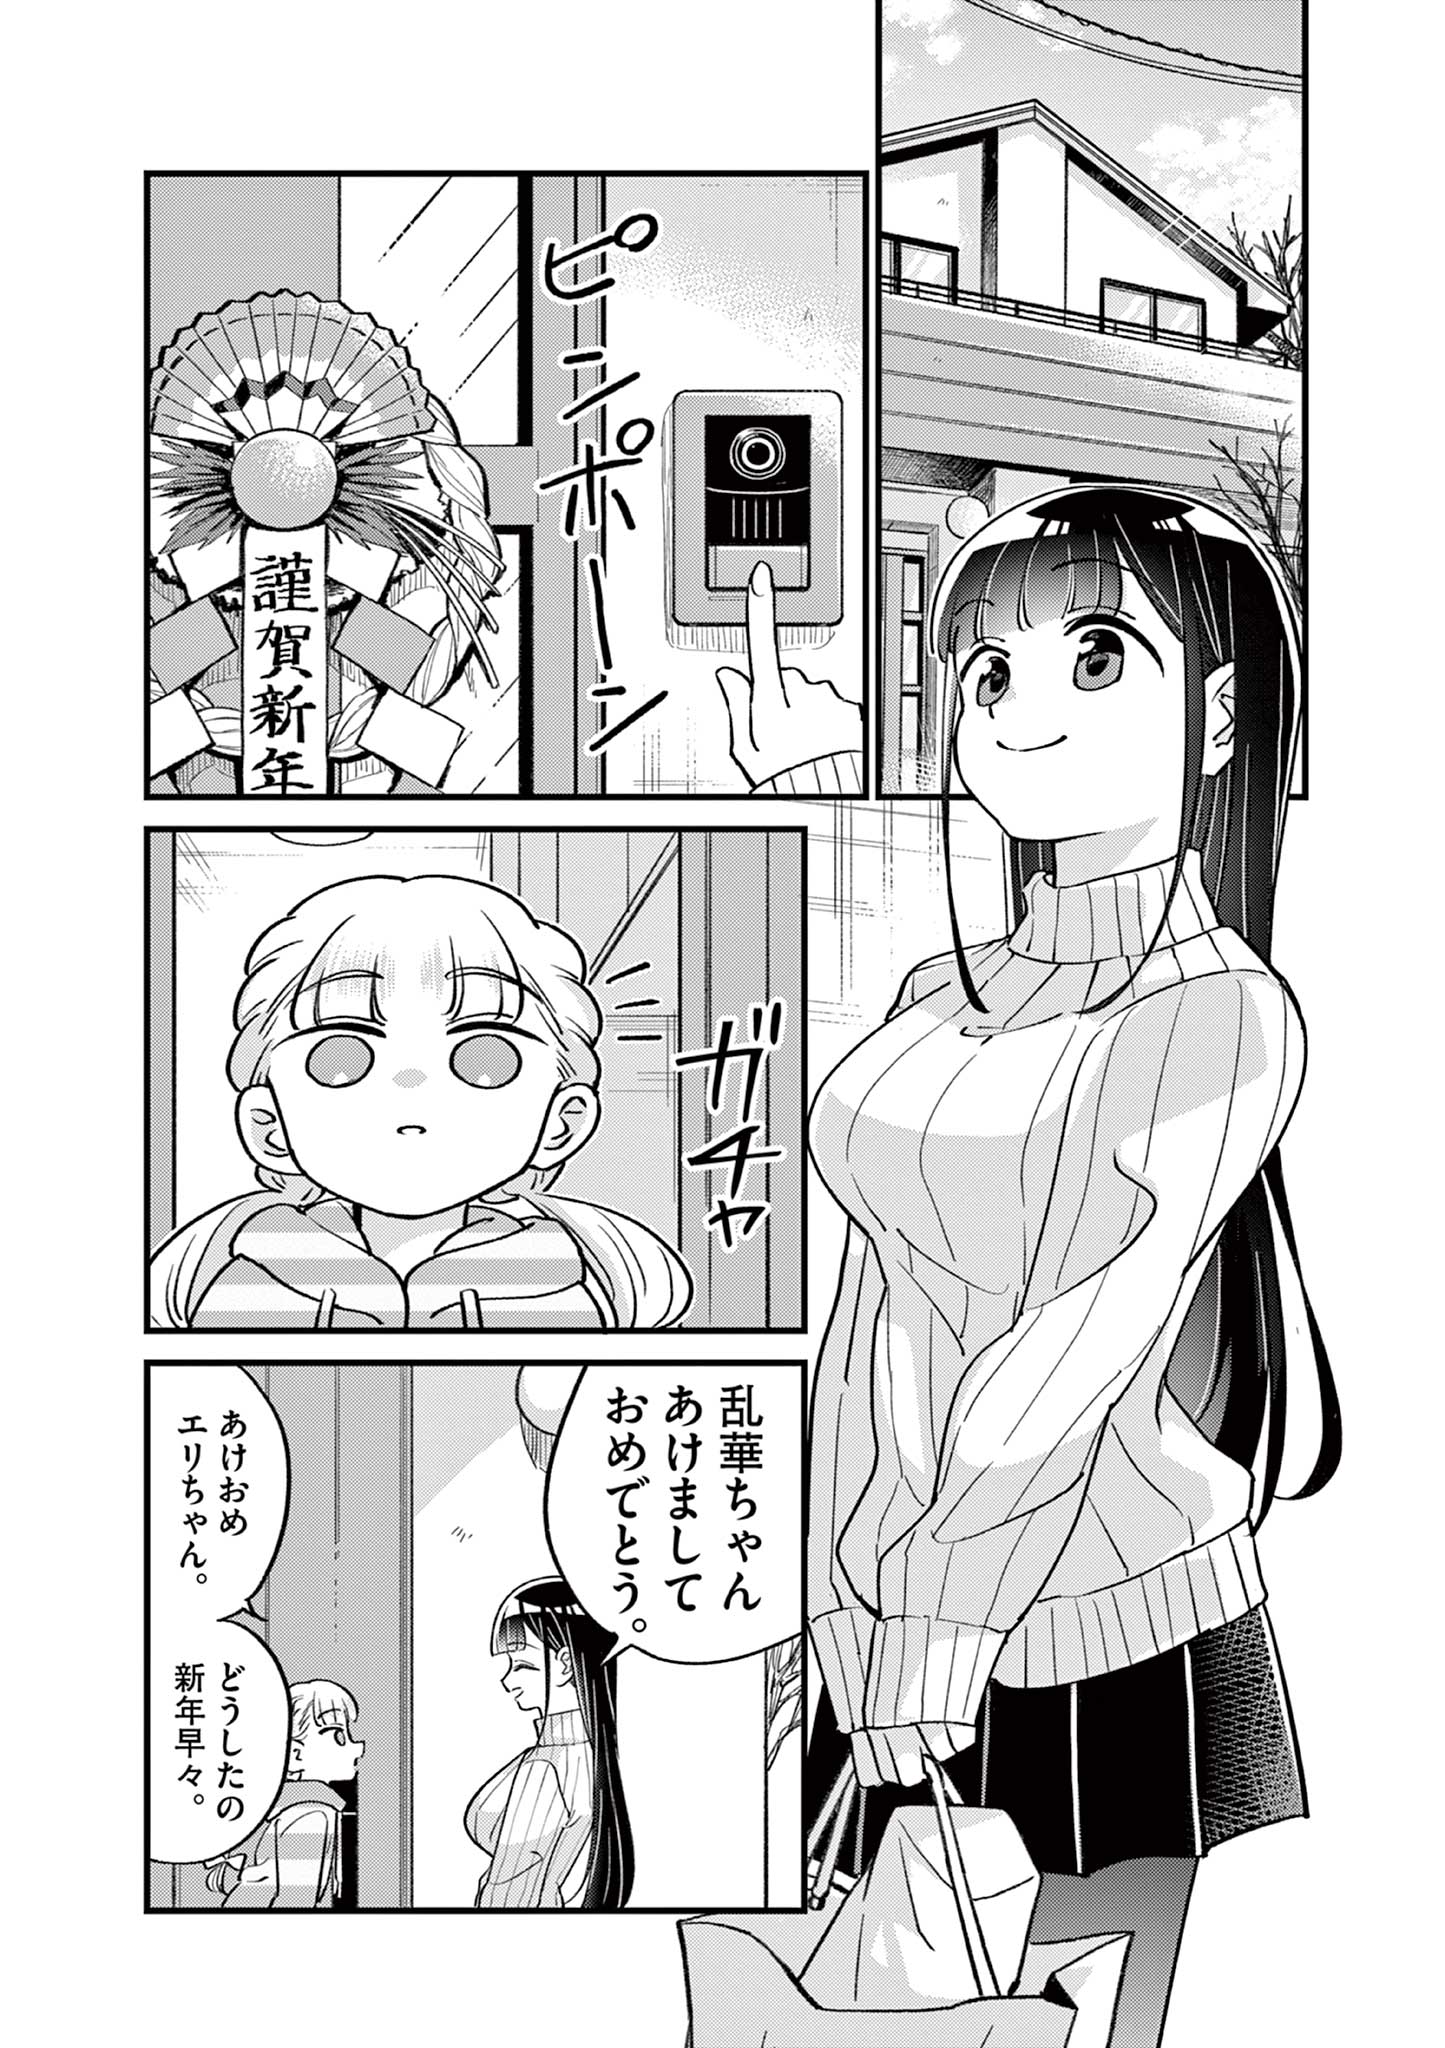 Ranka-chan wa Bitch ni Naritai - Chapter 17 - Page 1